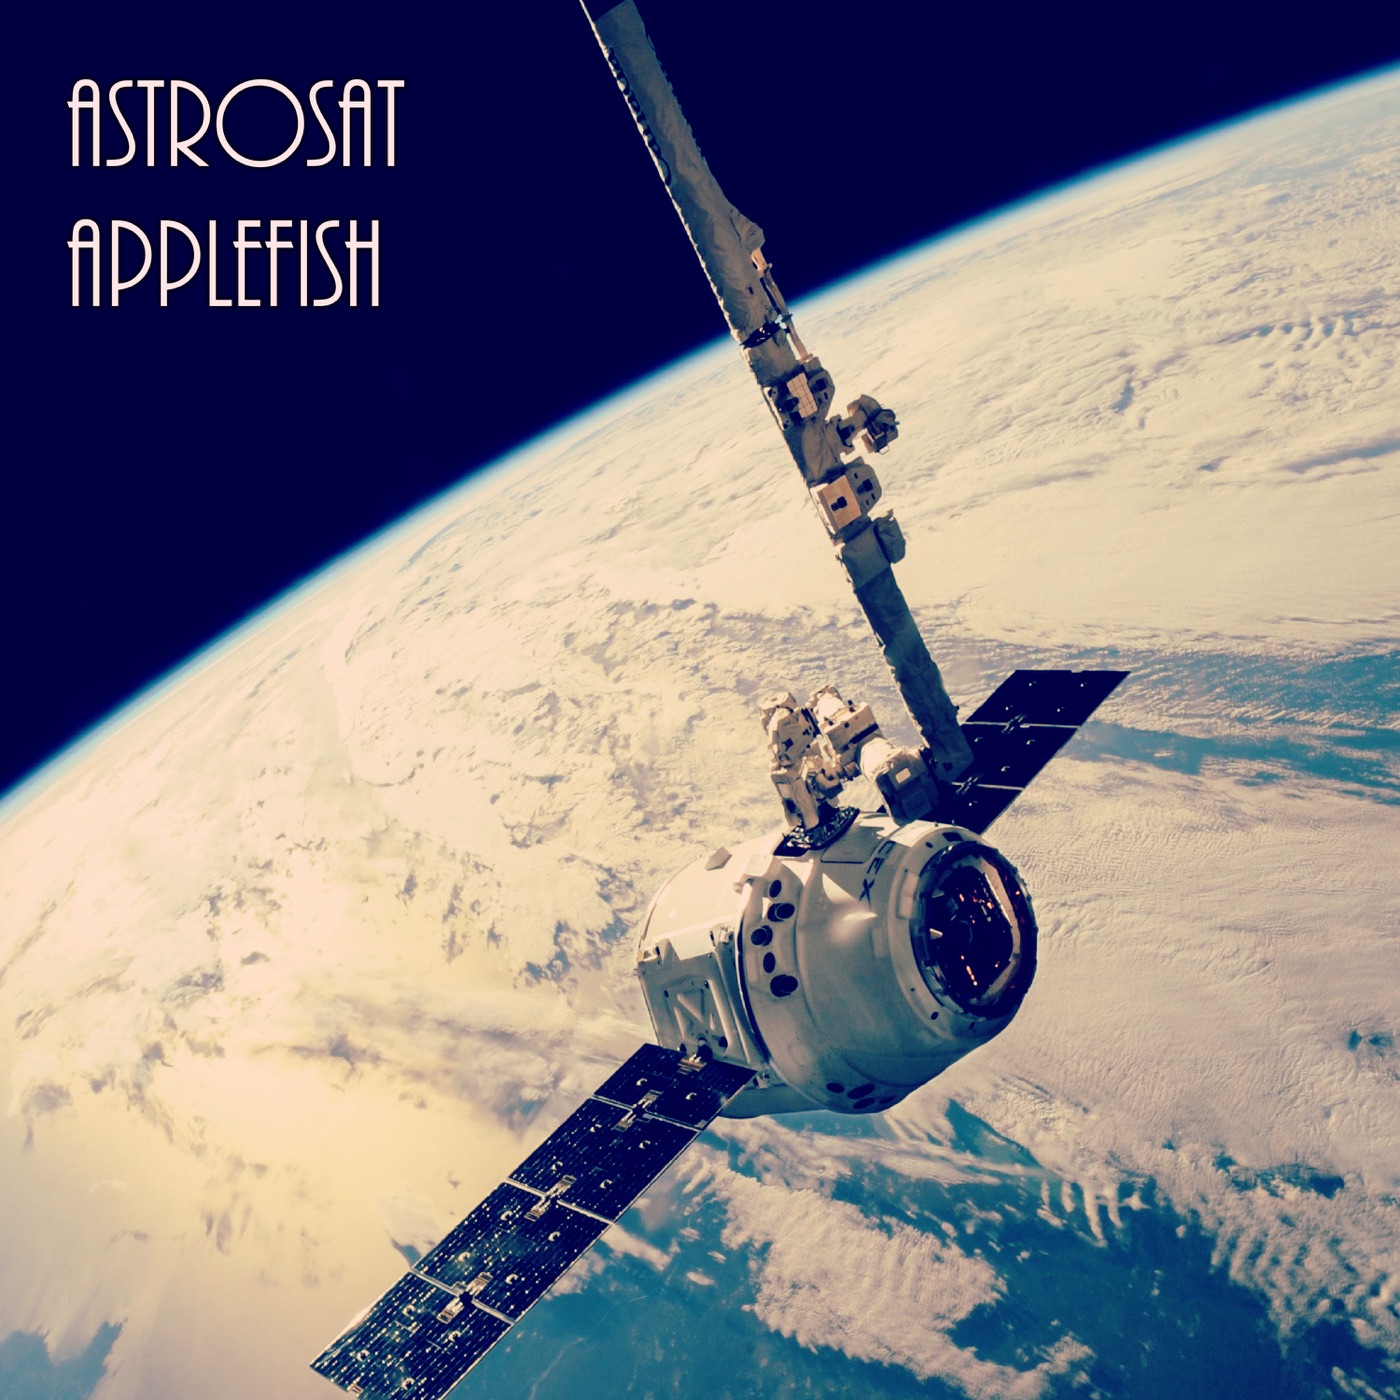 Astrosat by Applefish